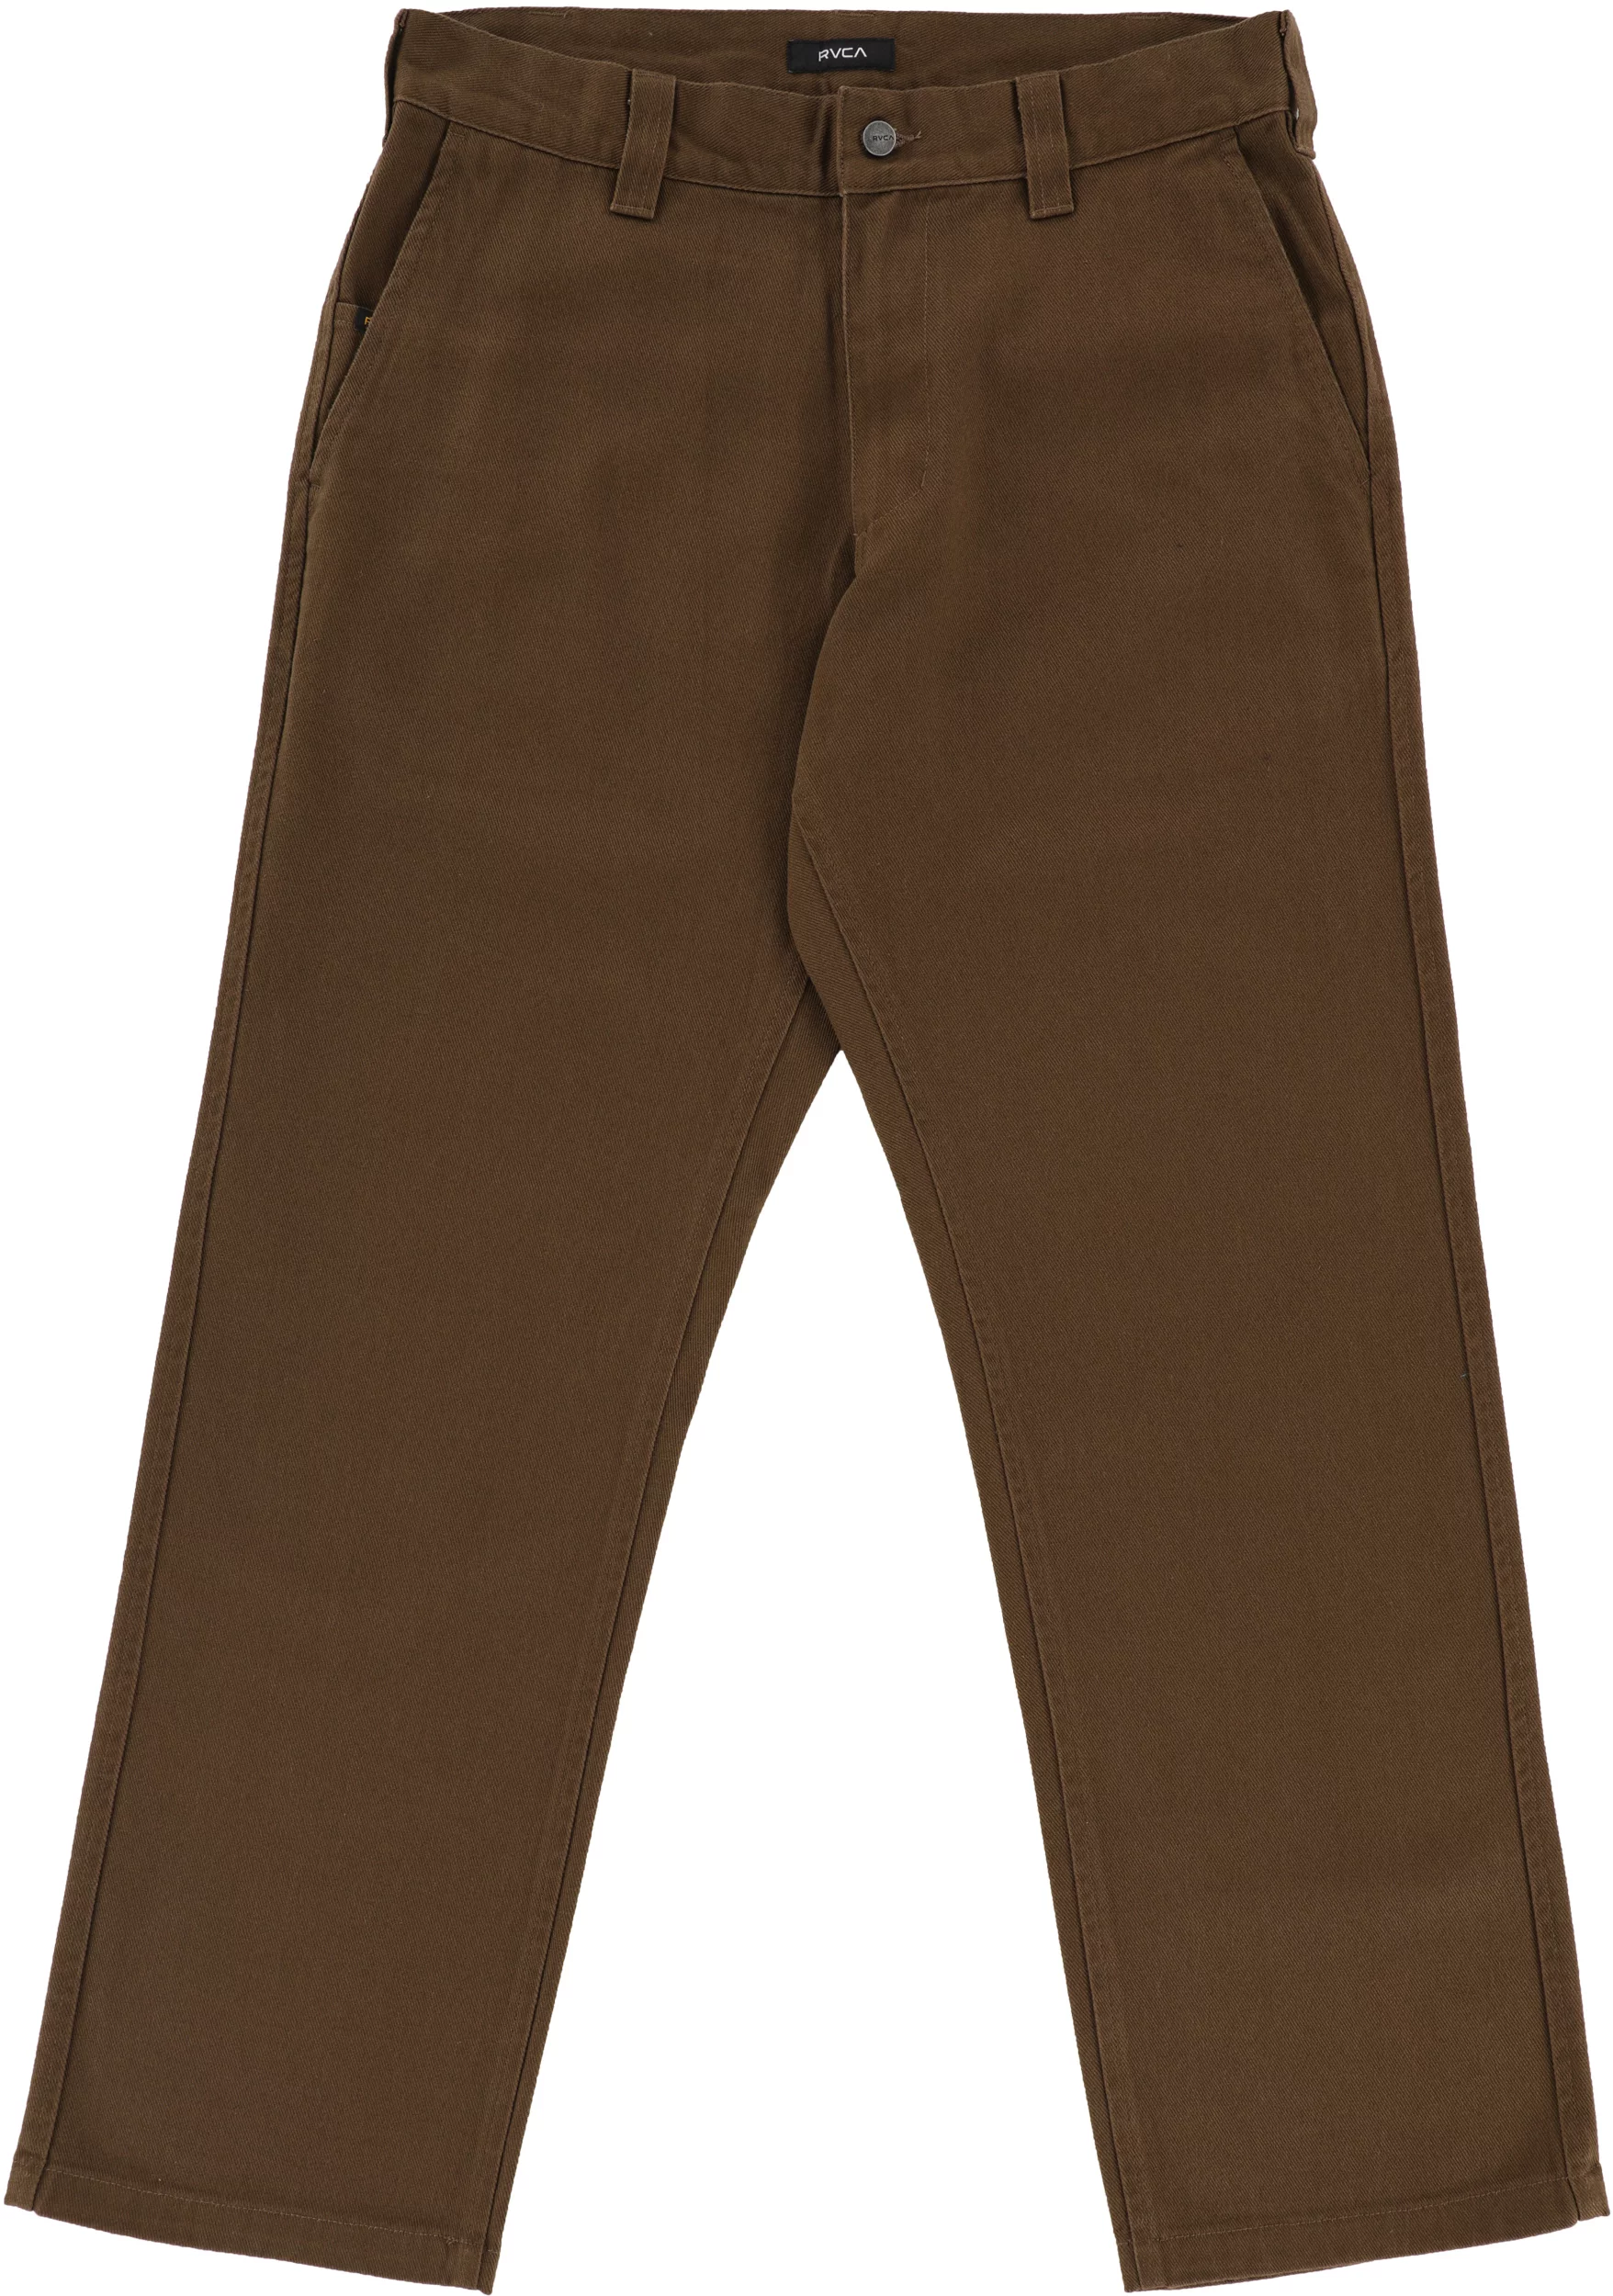 RVCA Americana Chino 2 Pants - bombay brown | Tactics